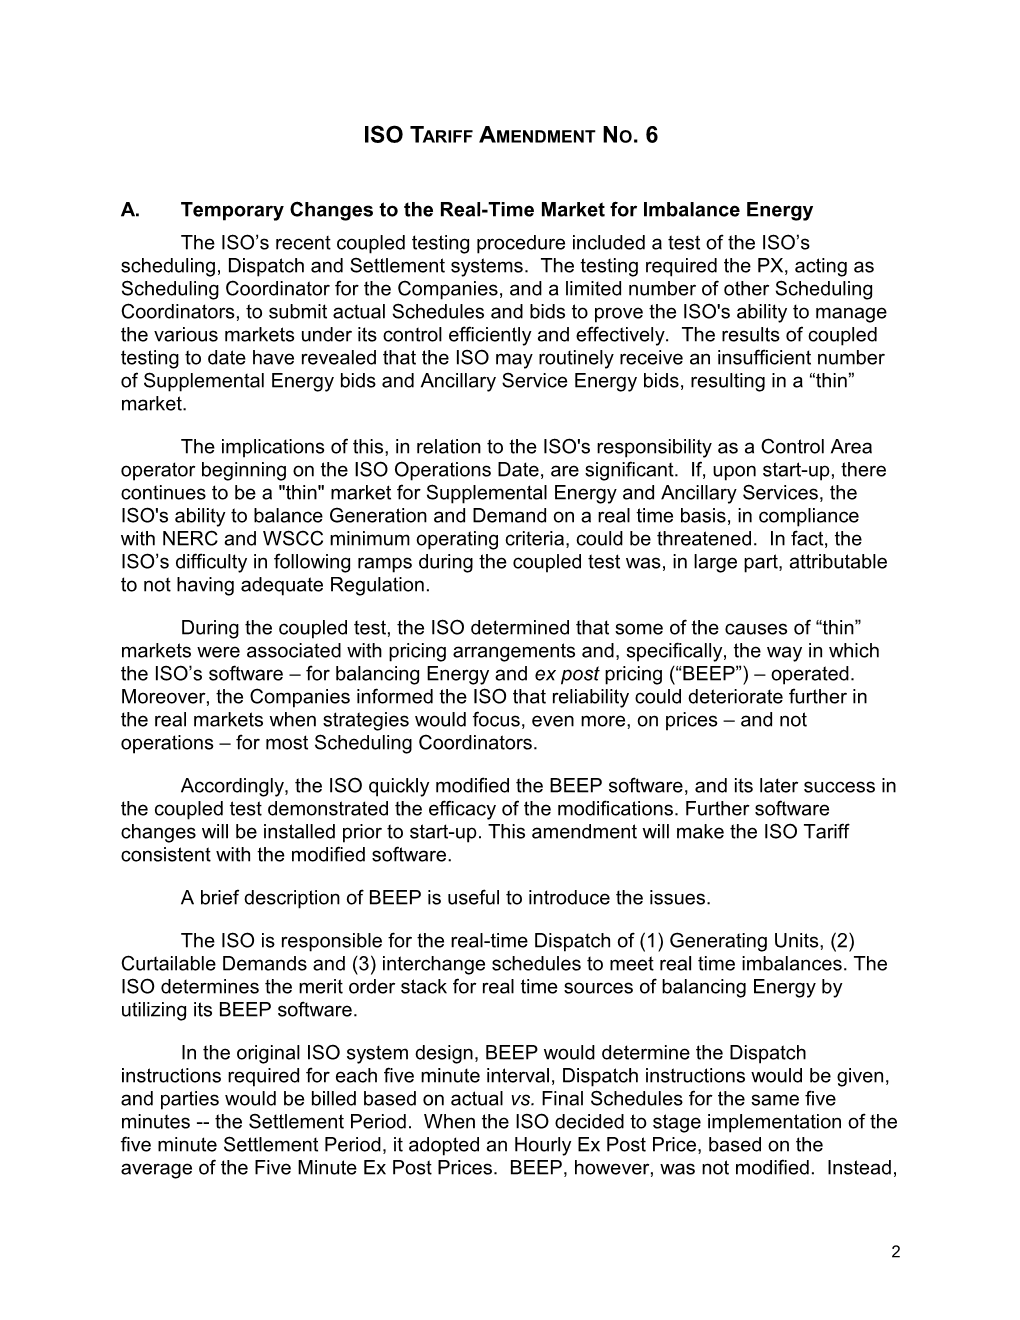 Federal Energy Regulatory Commission s6